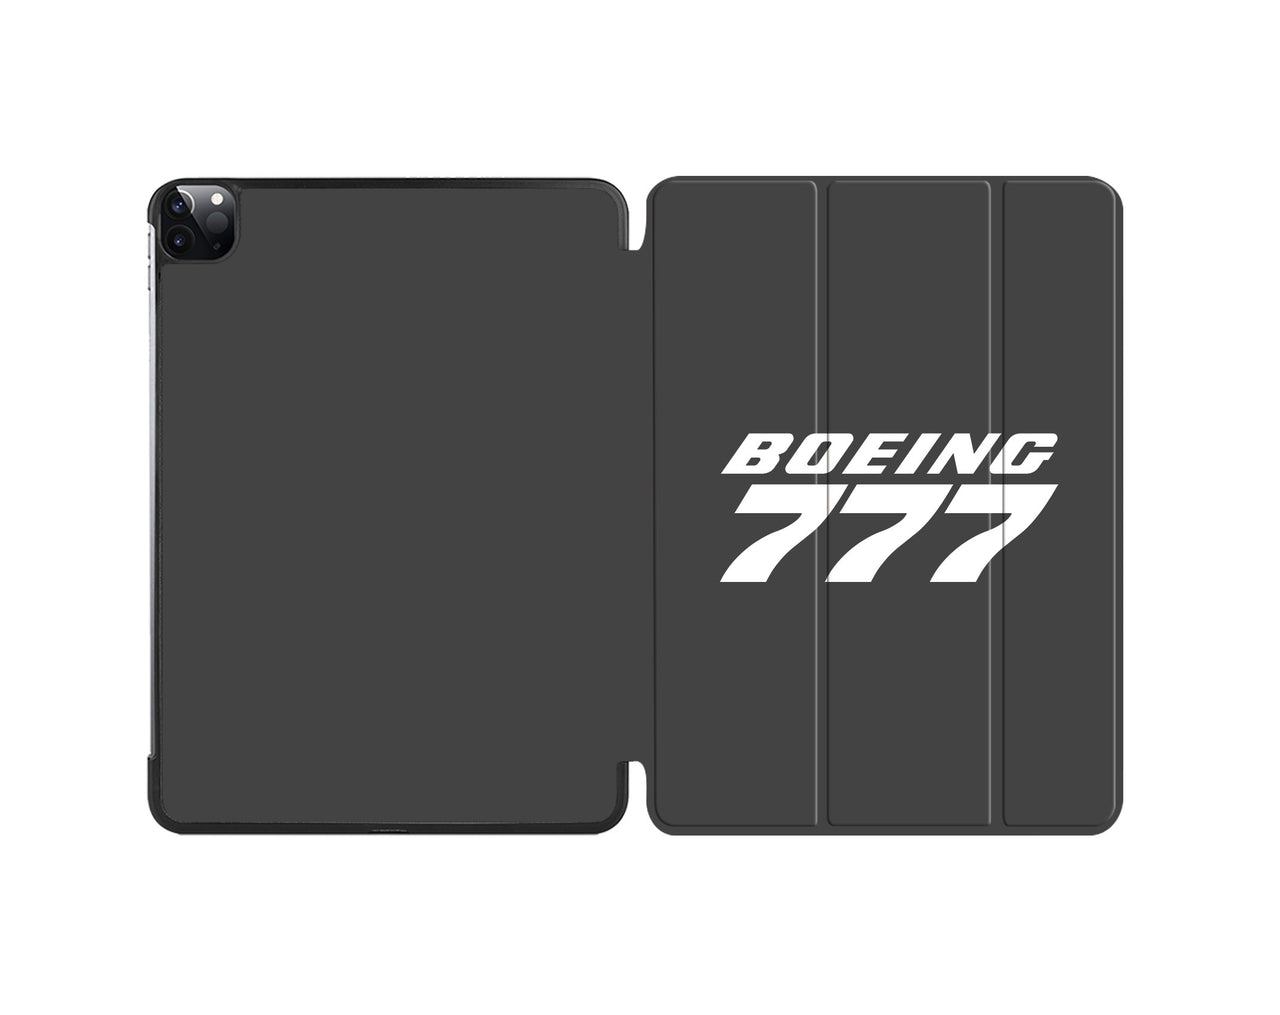 Boeing 777 & Text Designed iPad Cases